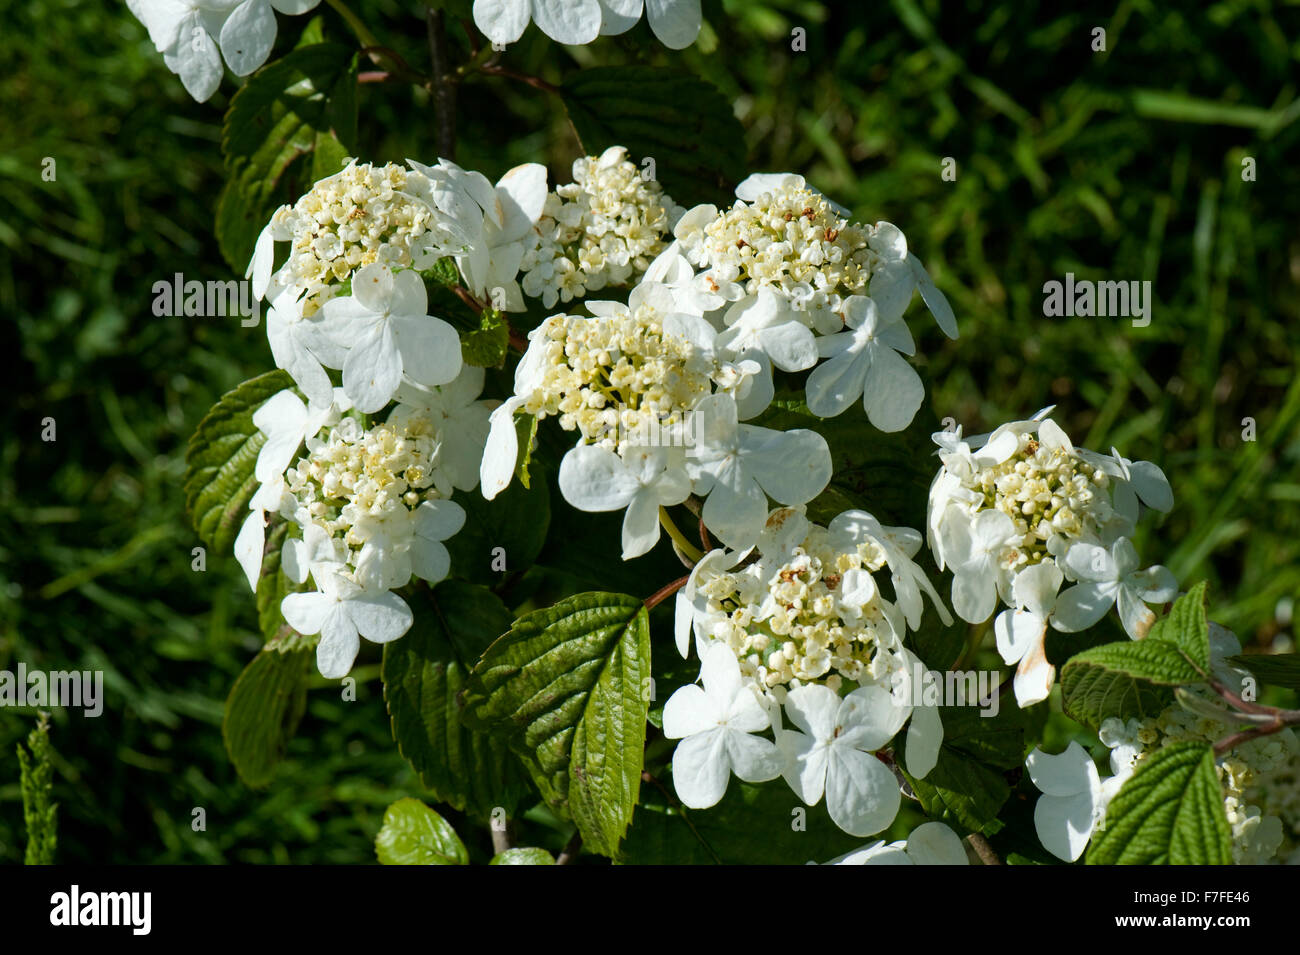 Japanese snowball, Viburnum plicatum f plicatum 'Mariesii', flowers on ornamental garden shrub, May Stock Photo